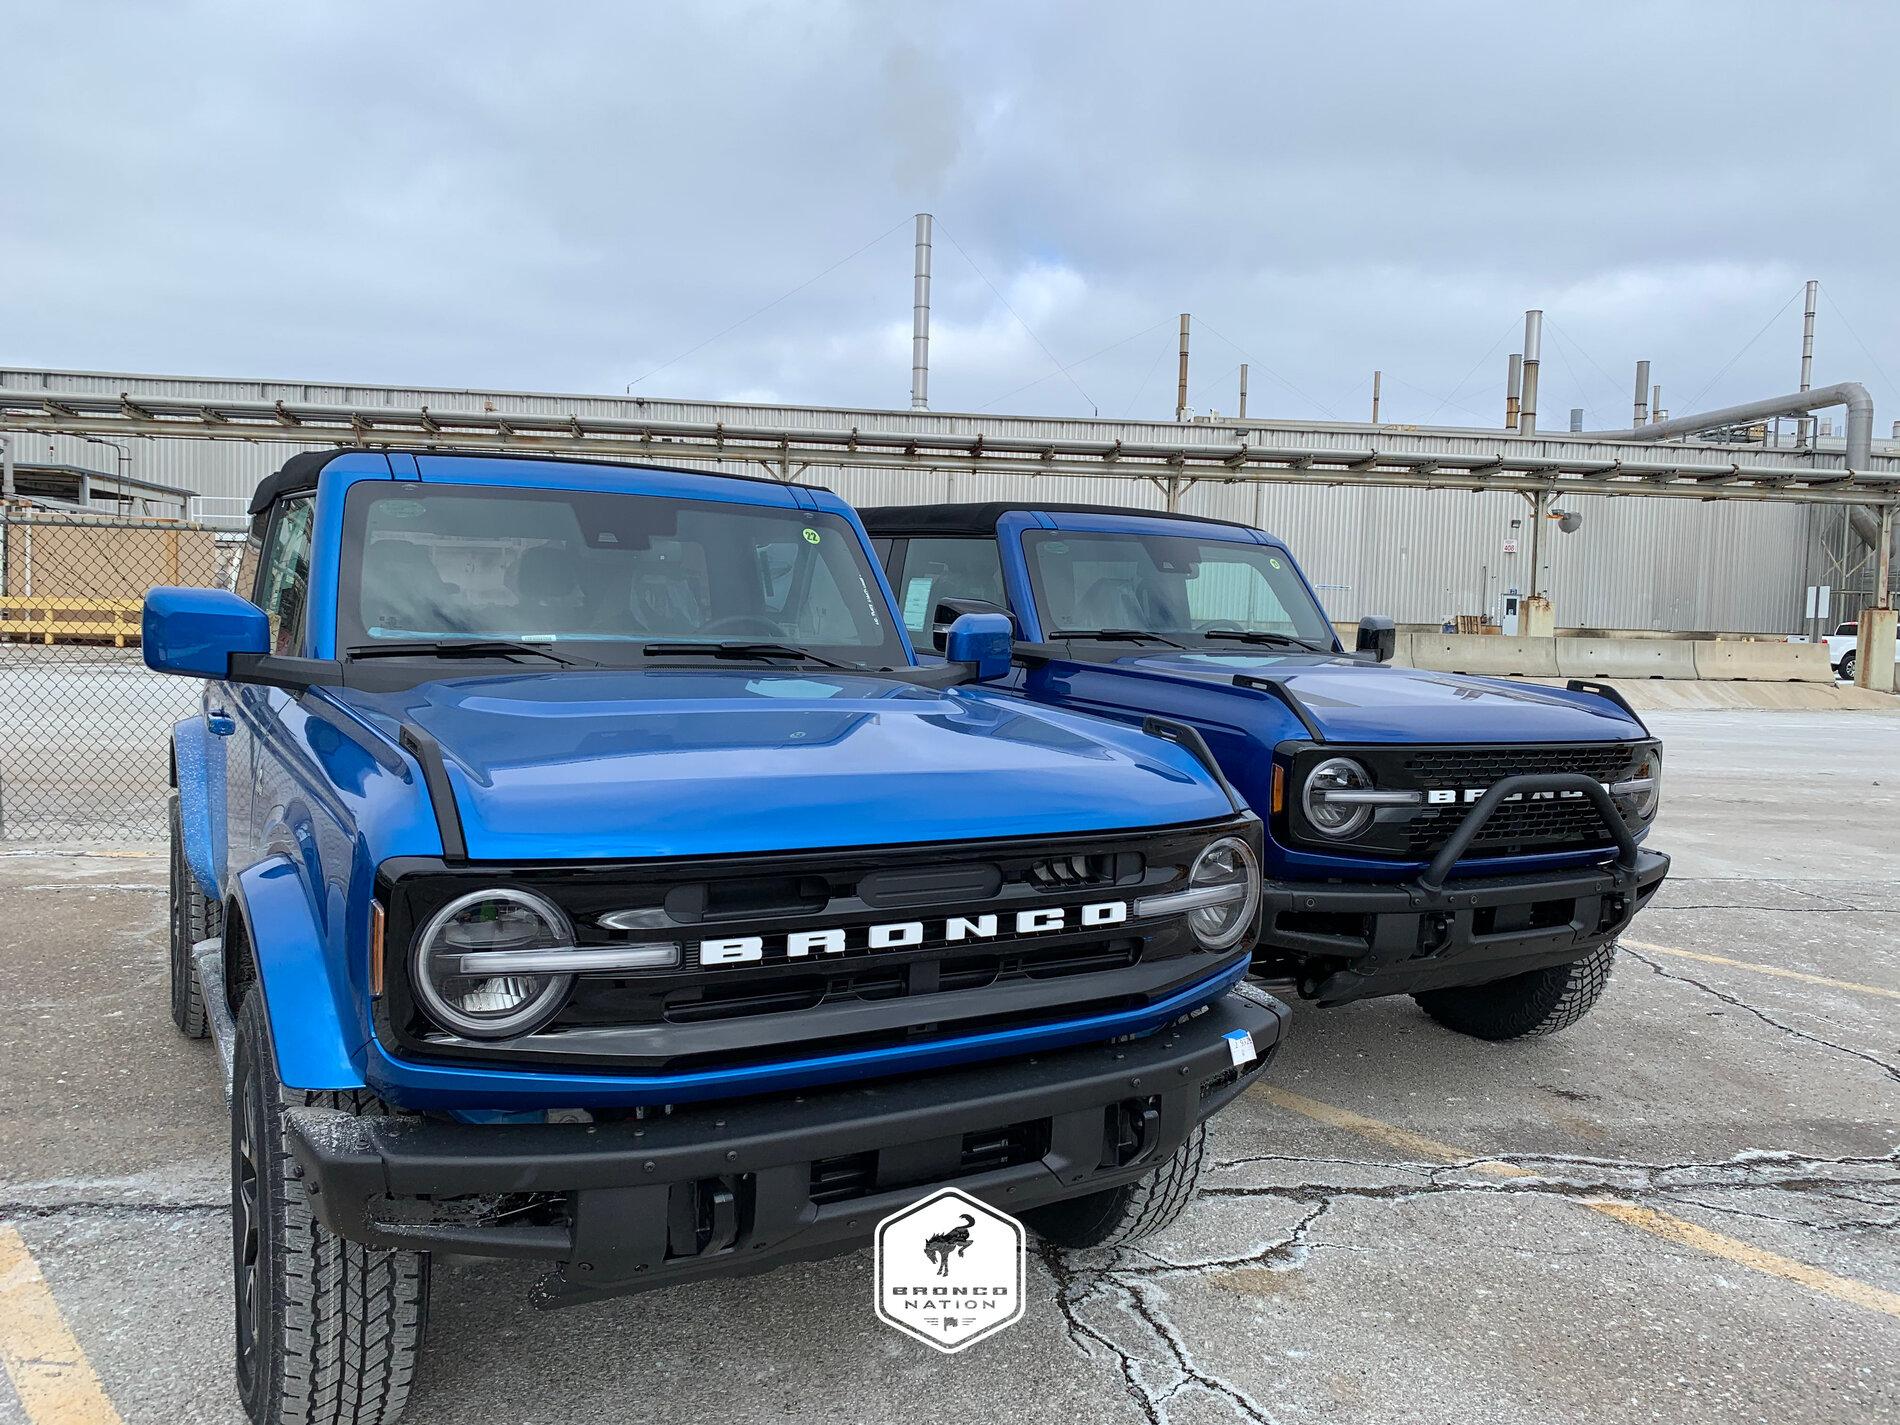 Ford Bronco Three Bronco Blues (Antimatter, Velocity, Lightning) 2021-bronco-antimatter-blue-vs-velocity-blue-vs-lightning-blue-10